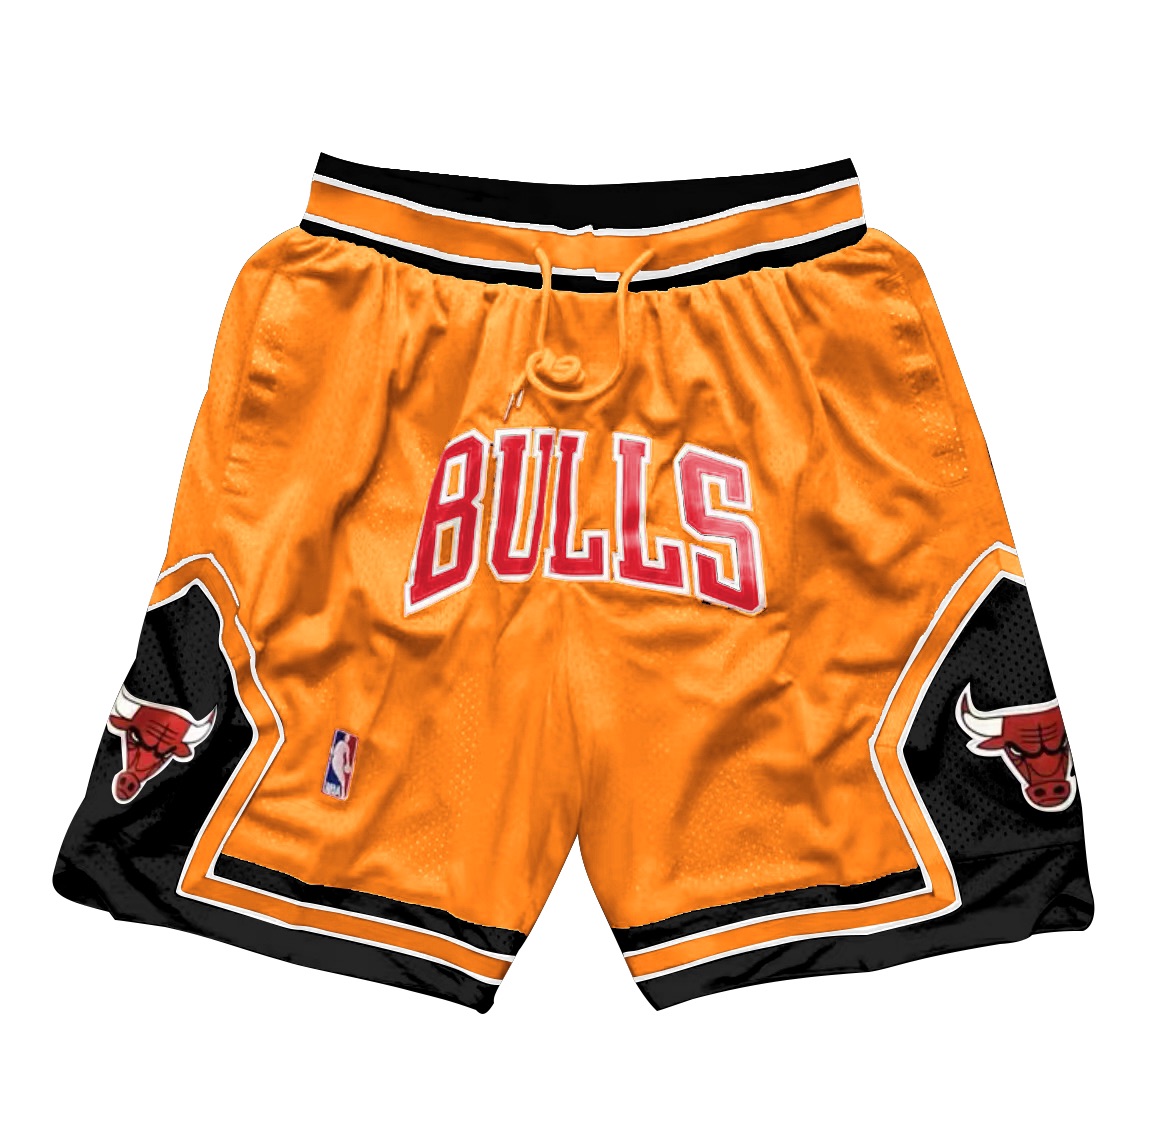 ODM Sportswear - BAPE x NBA Retro shorts finished products